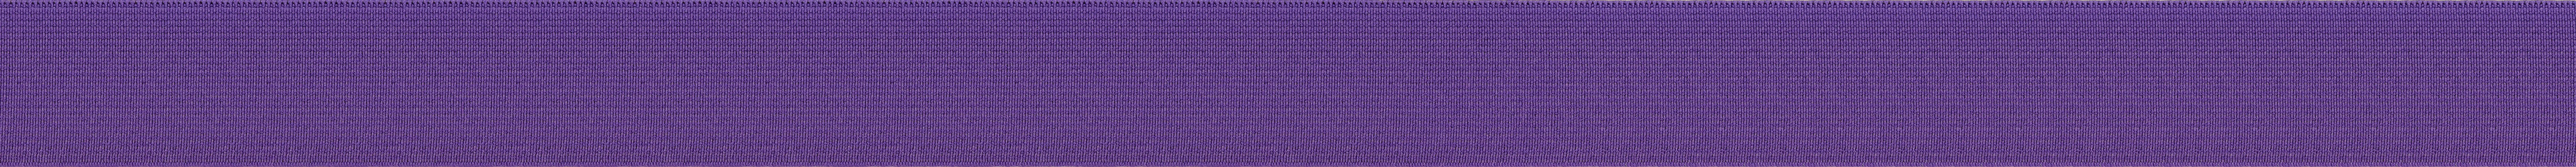 elastic band purple